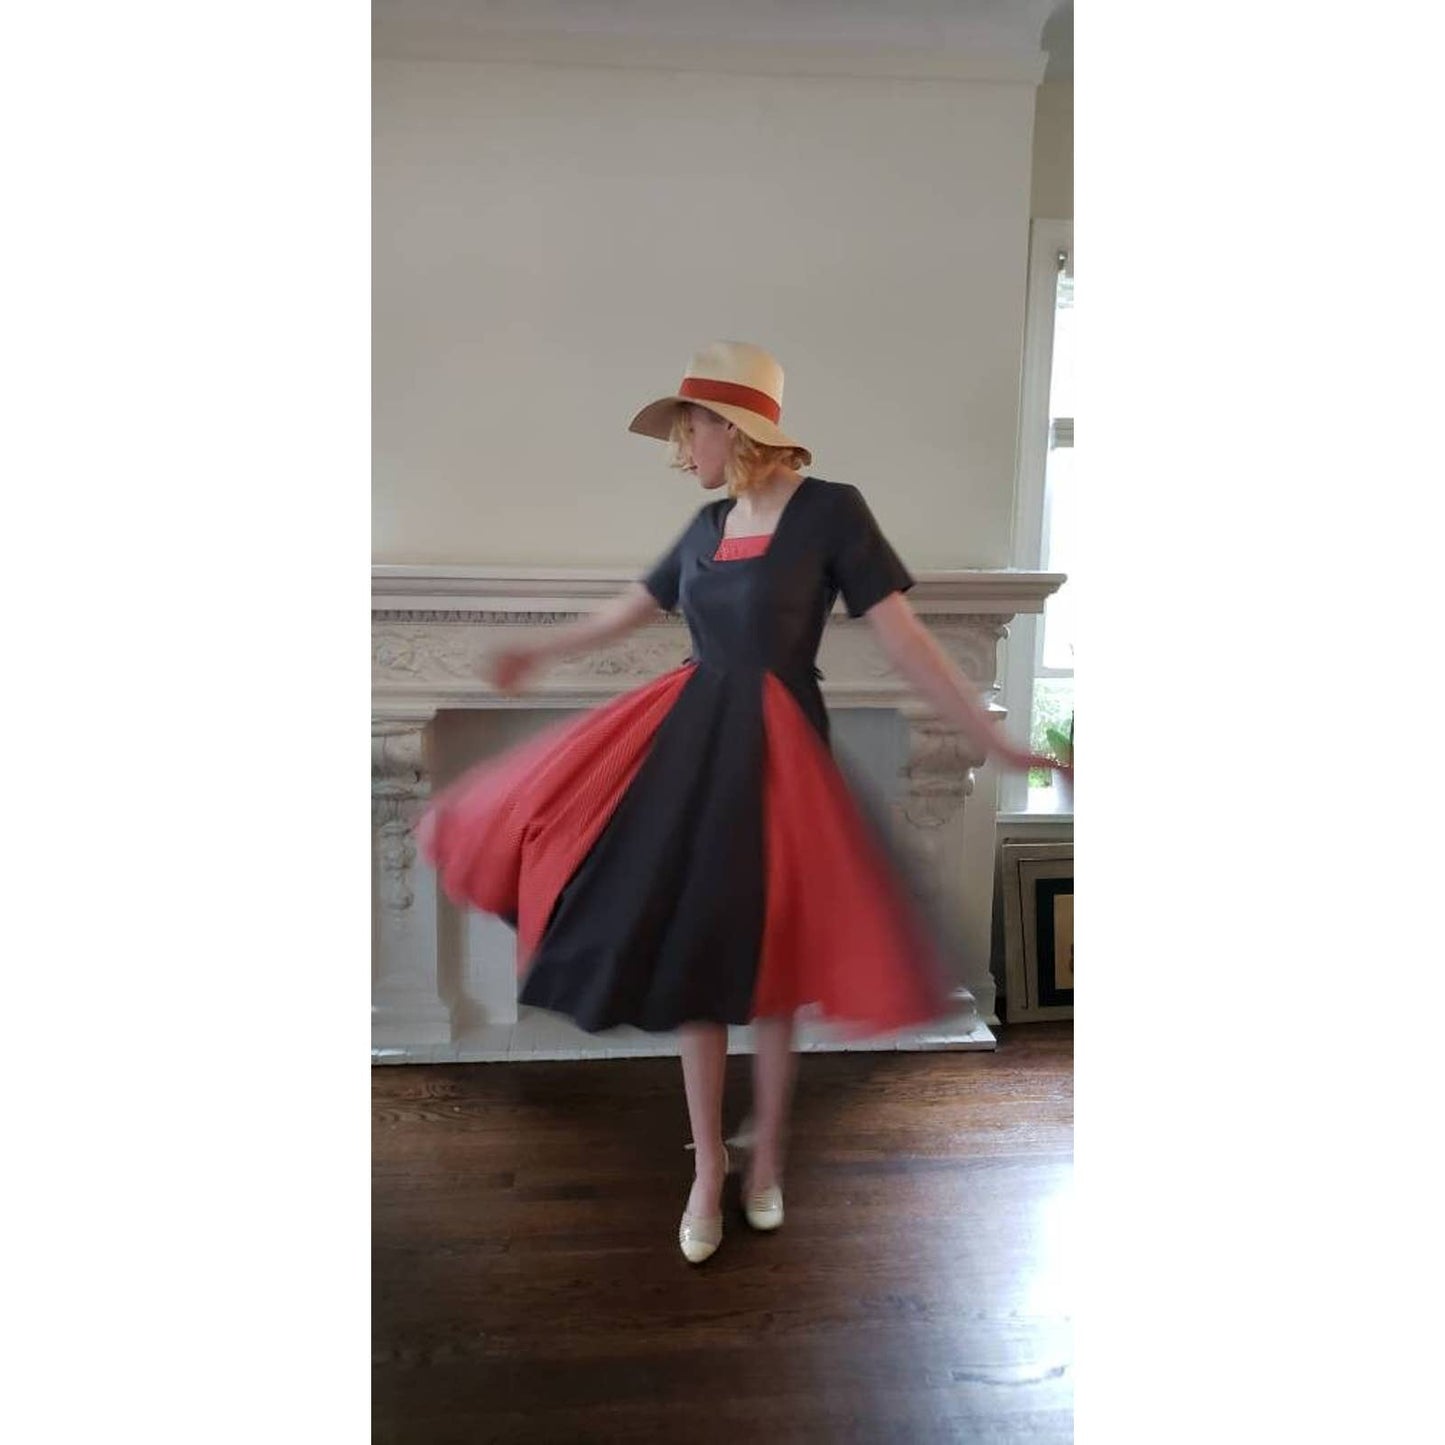 Vintage 50s Cotton Print Dress Gray Red Polka Dot Short Sleeves Circle Skirt